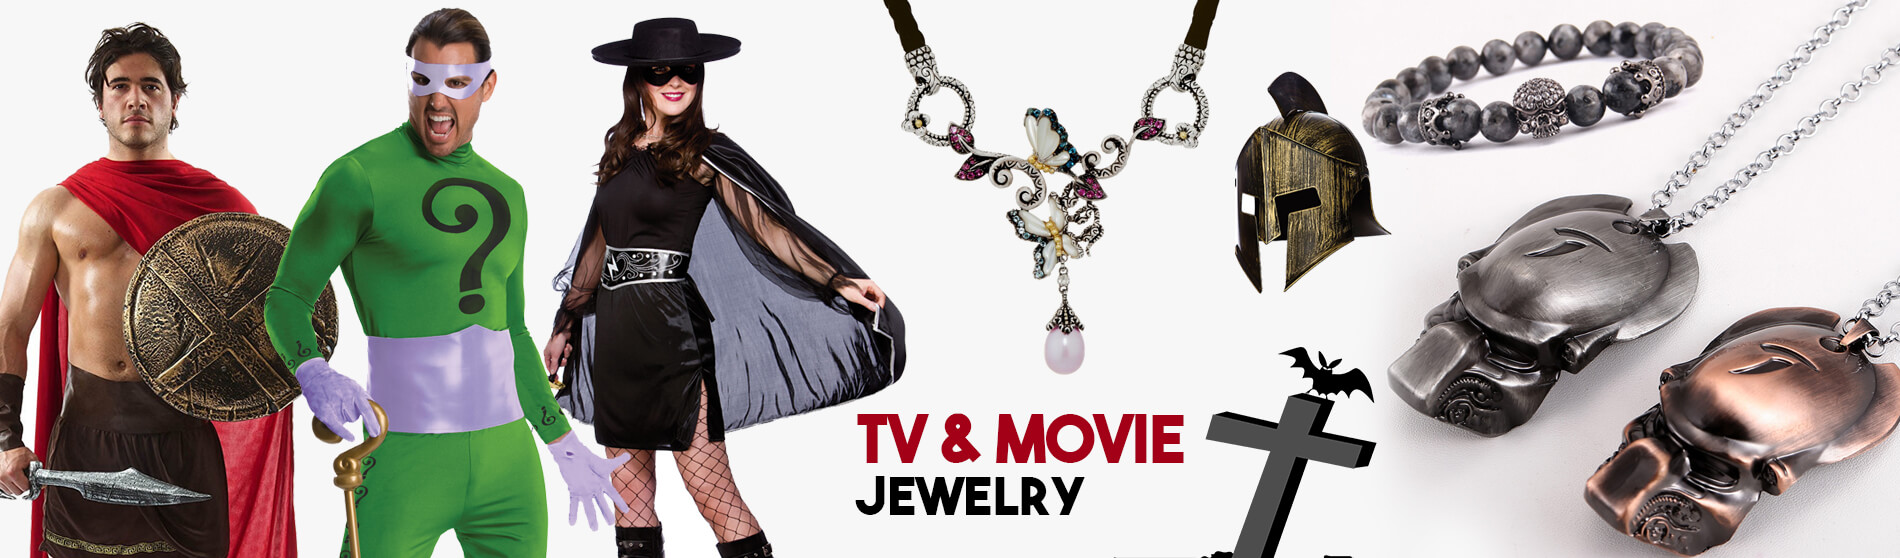 Glendale Halloween : TV-Movie-Jewelry